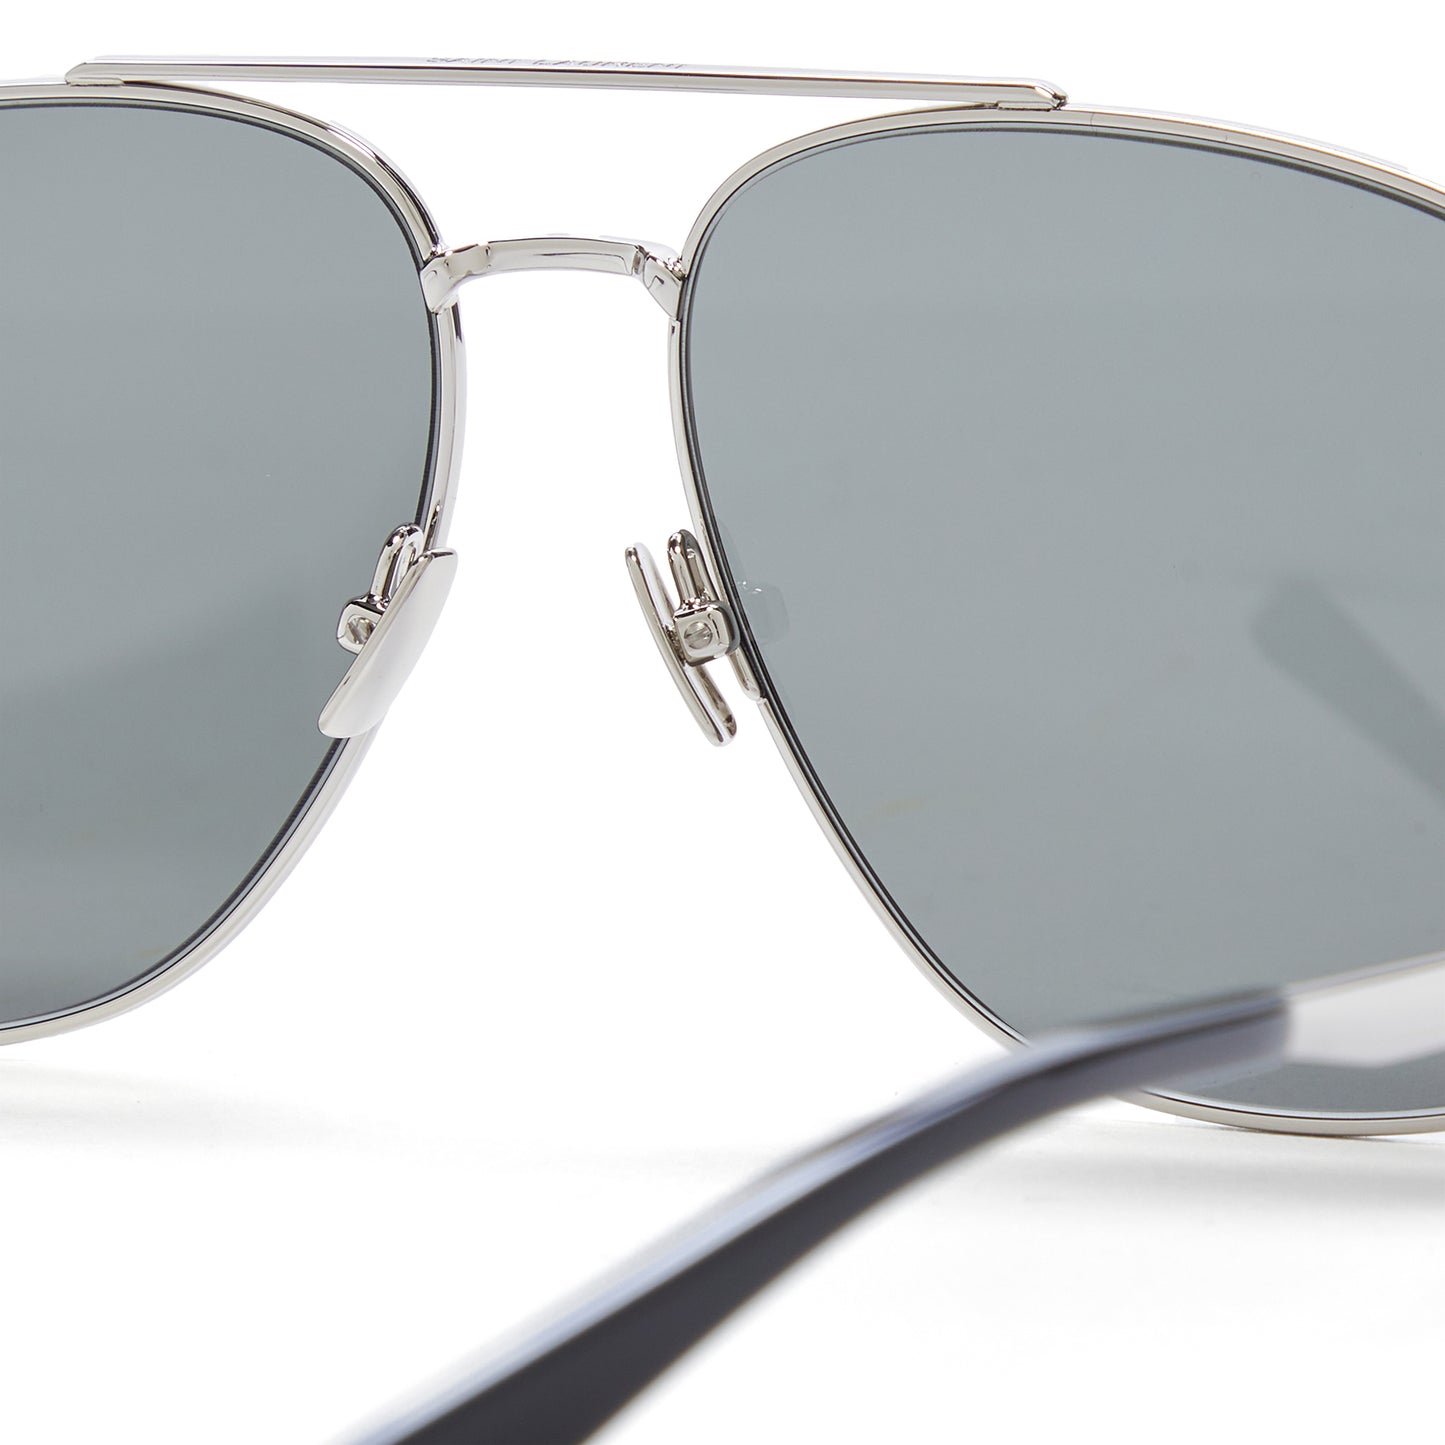 Saint Laurent SL 653 Sunglasses (Silver/Grey)